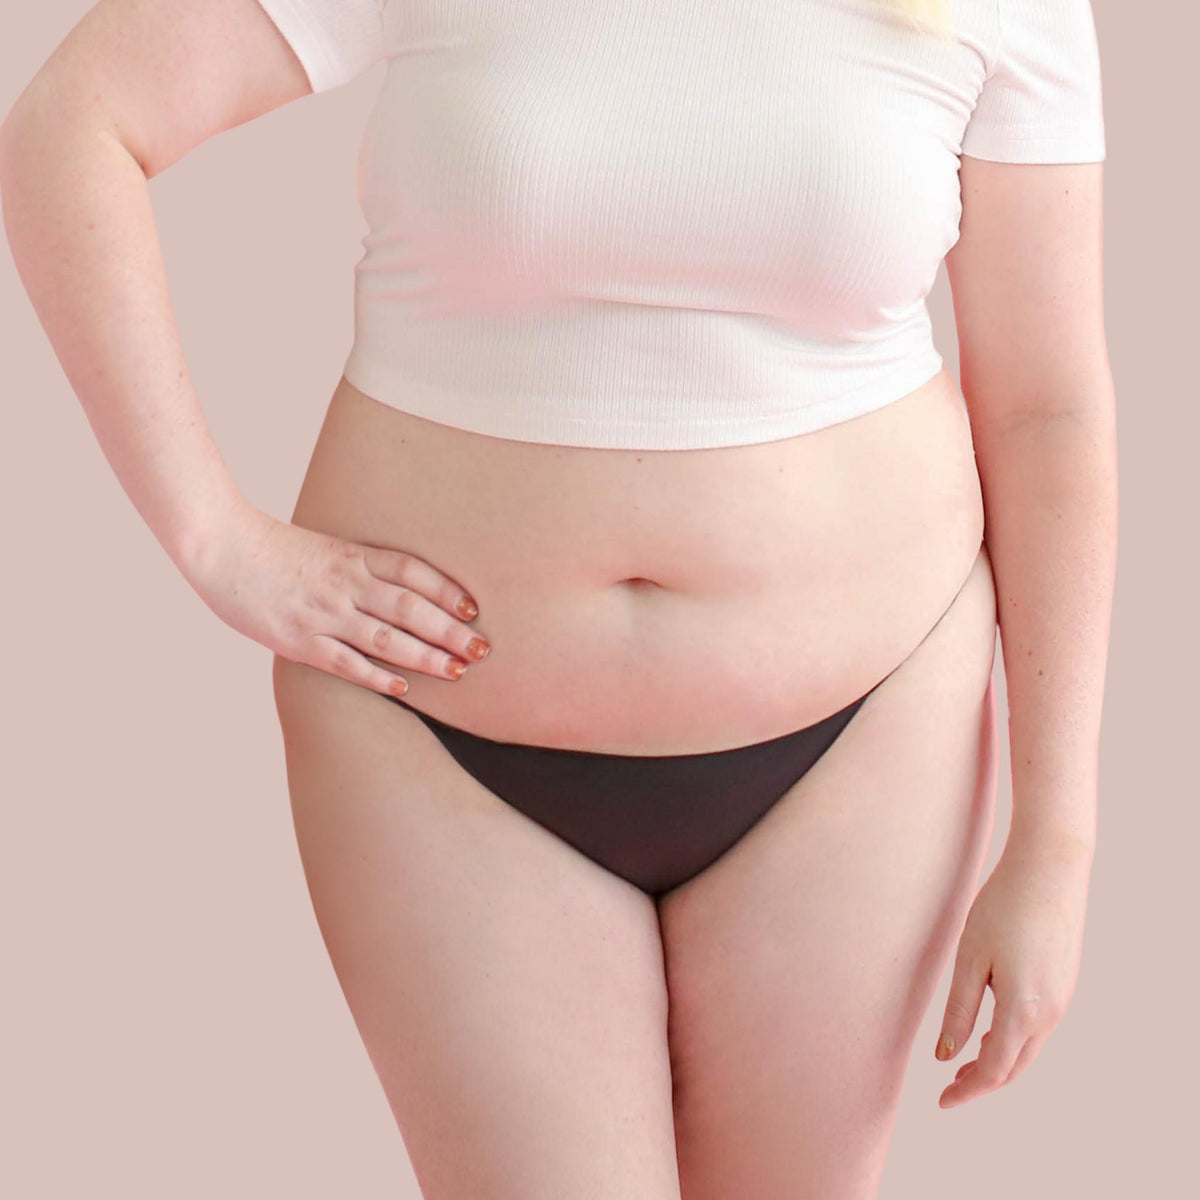 Lorals model Amanda demonstrates the front view of Pleasure Undies in Black Bikinis